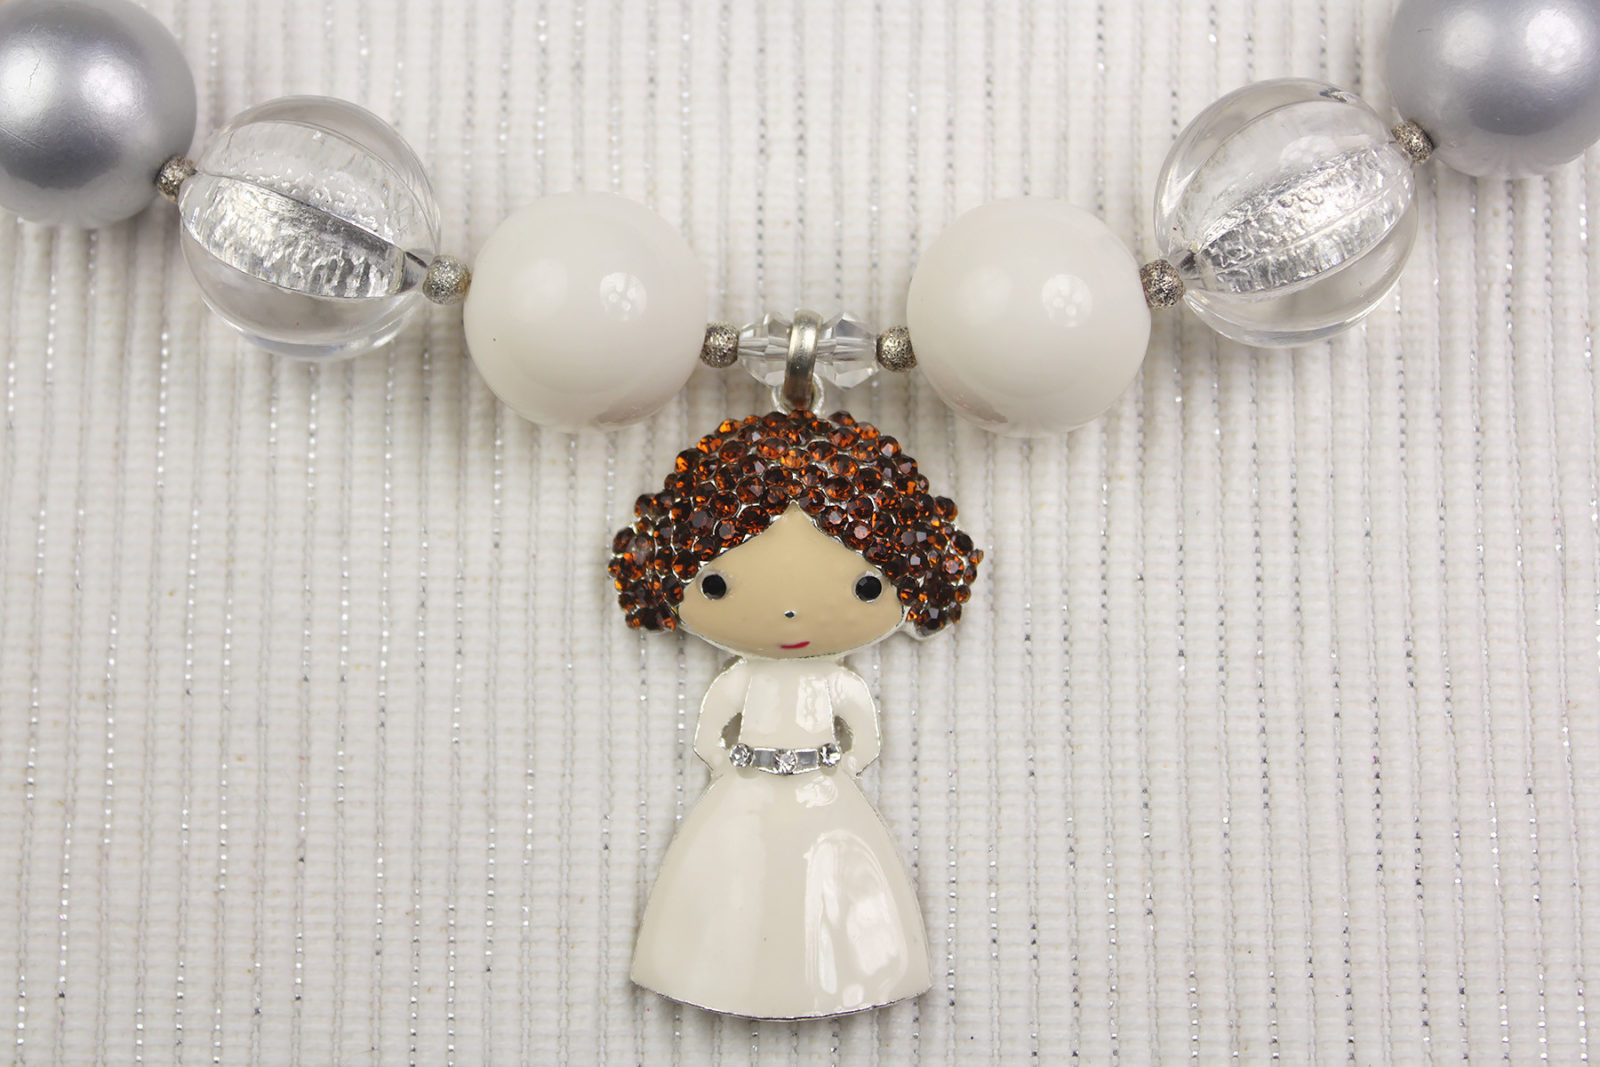 Review – Princess Leia chunky bead necklace